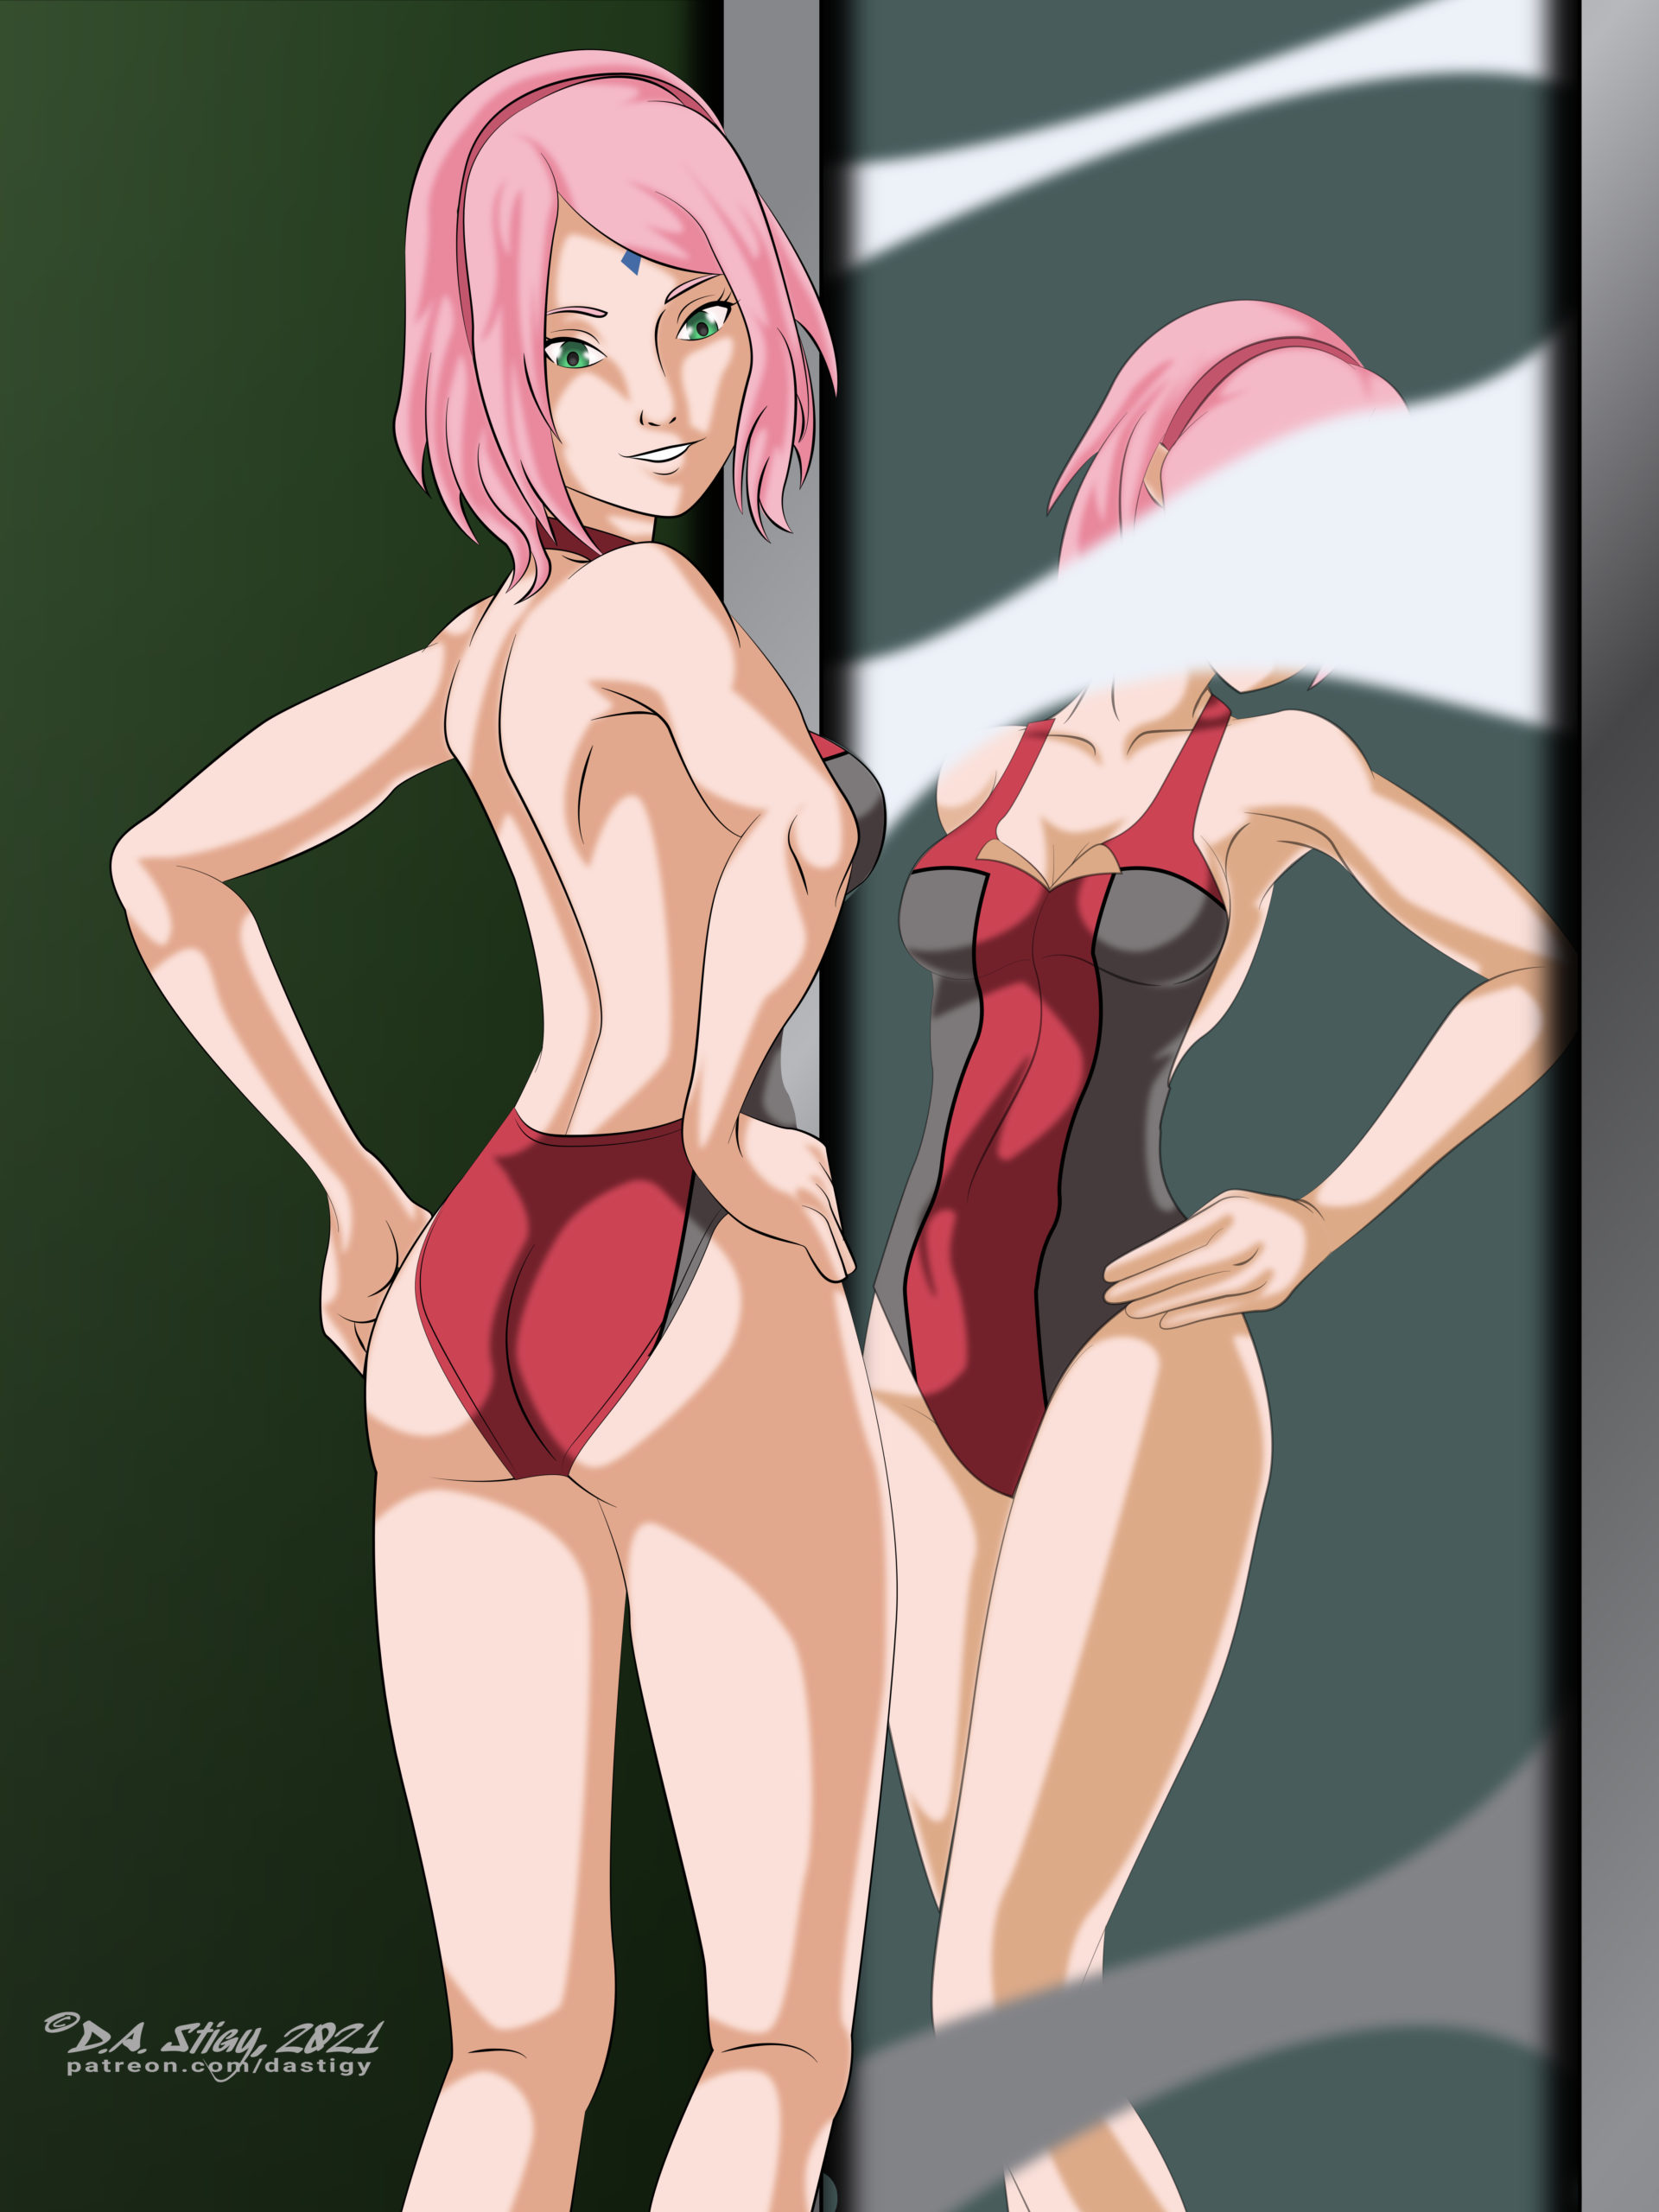 Sakura Haruno trying on an old swimsuit in the mirror.